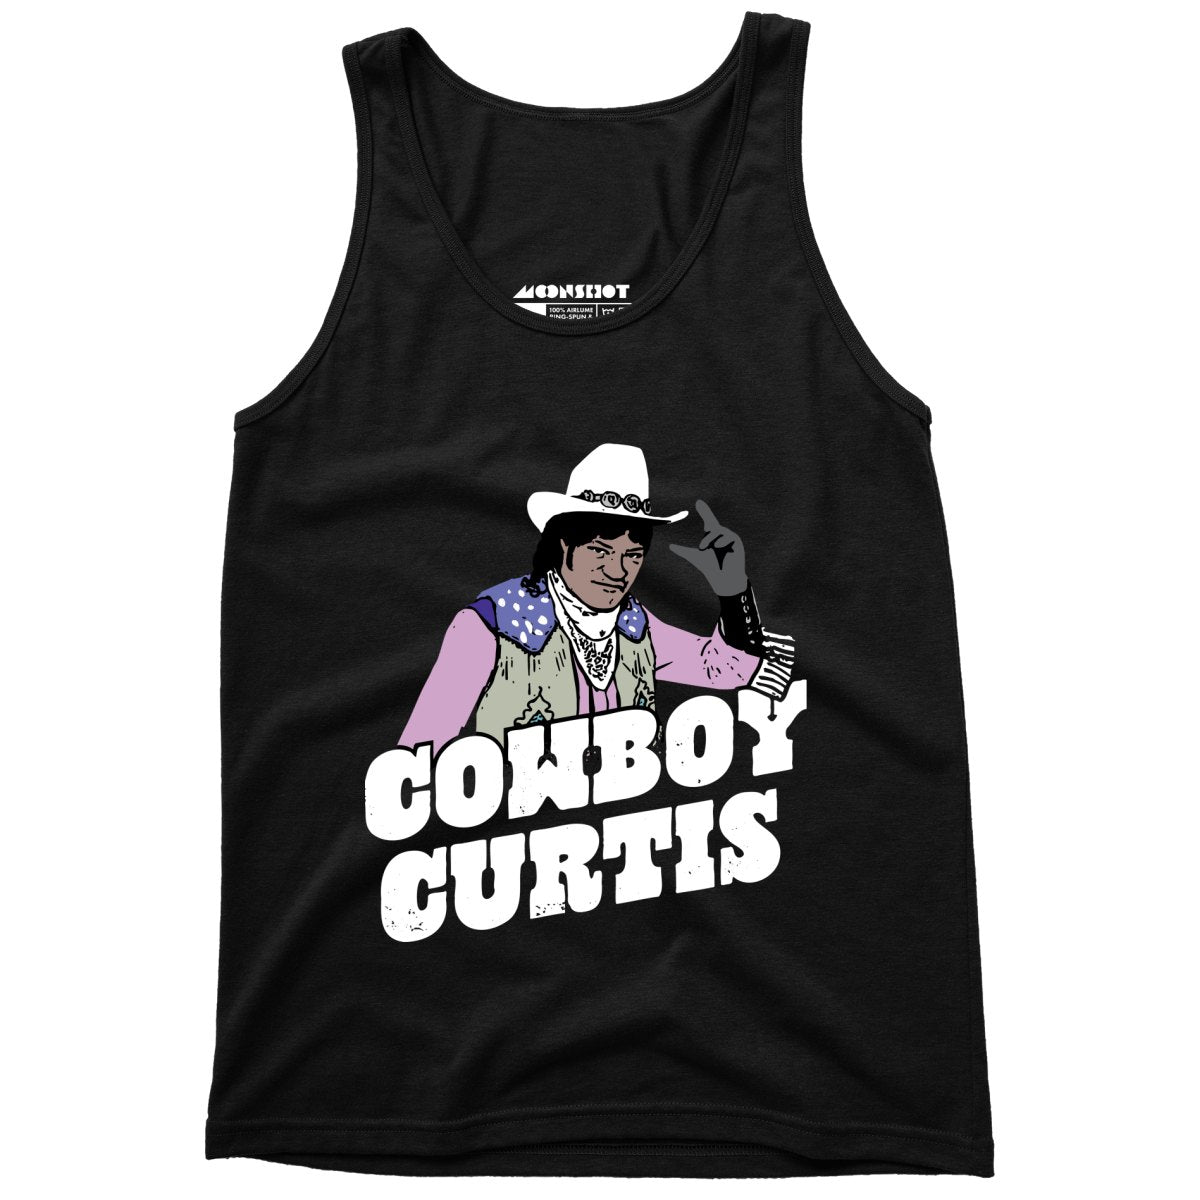 Cowboy Curtis - Unisex Tank Top